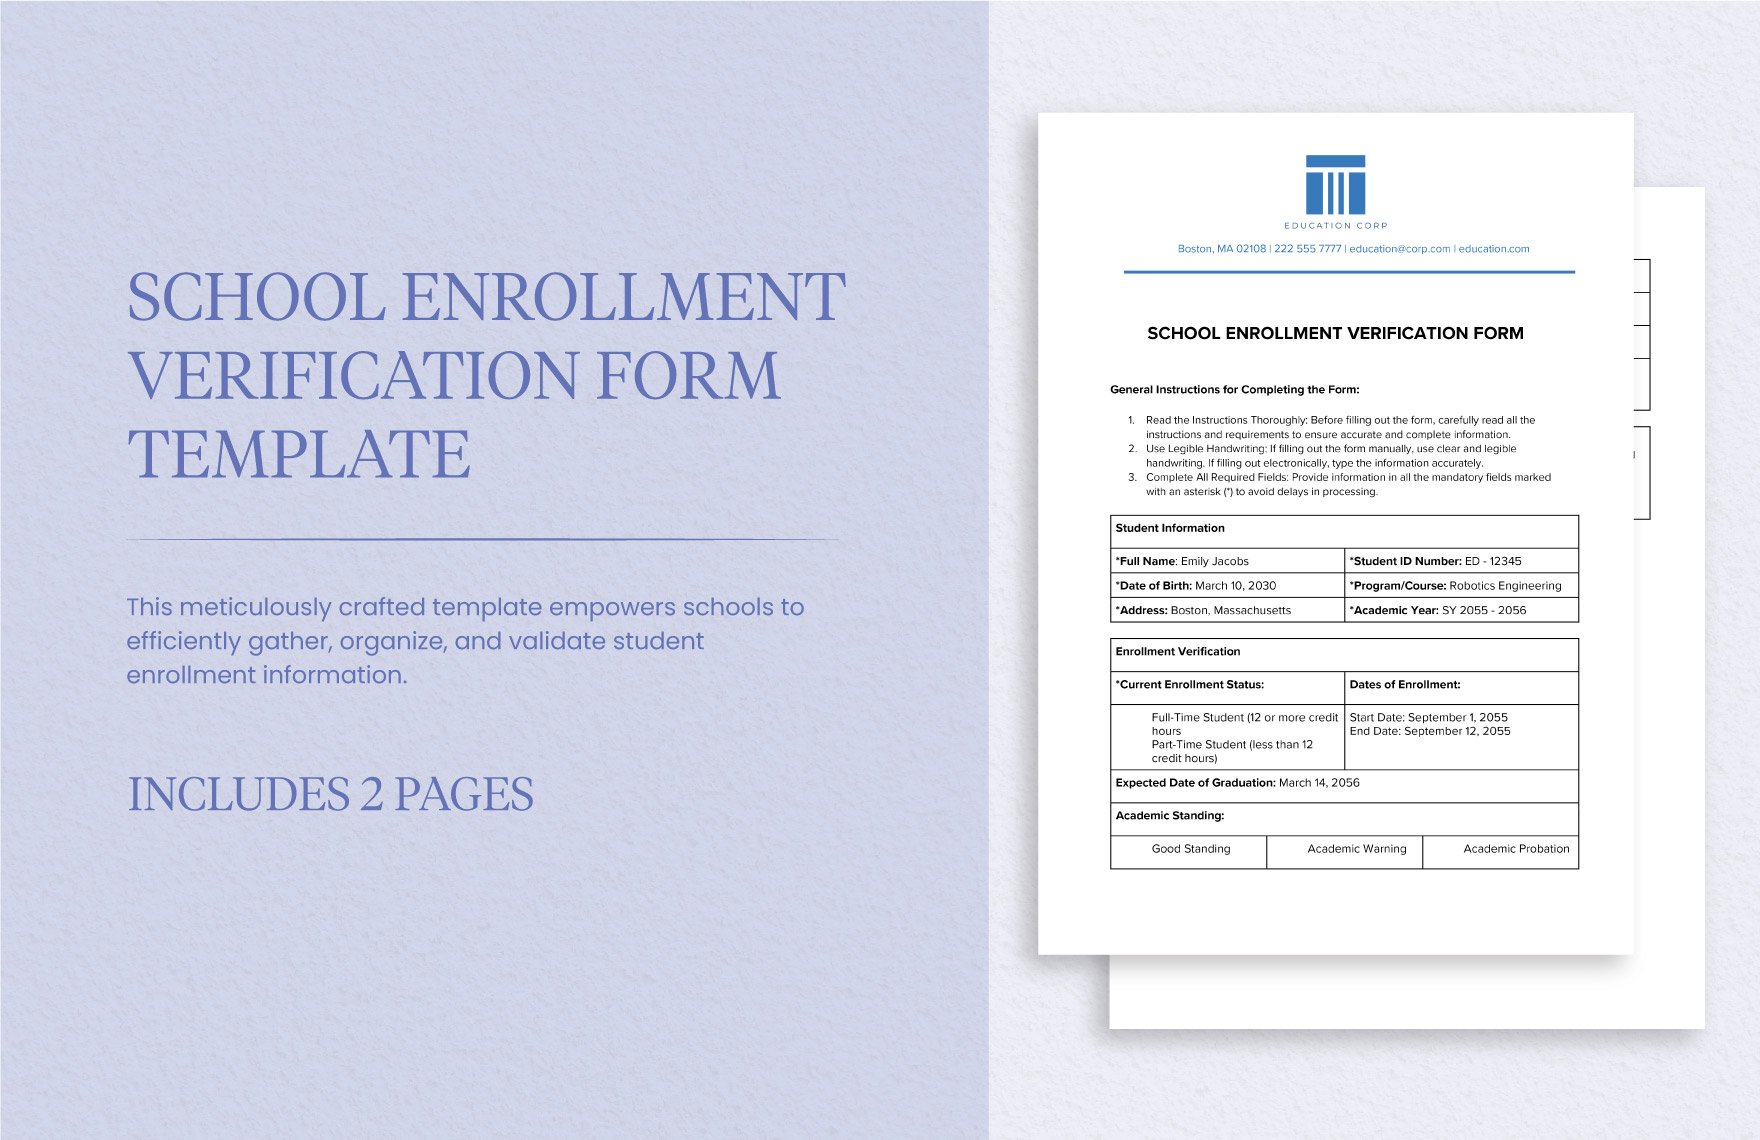 School Enrollment Verification Form Template in Word, Google Docs, PDF